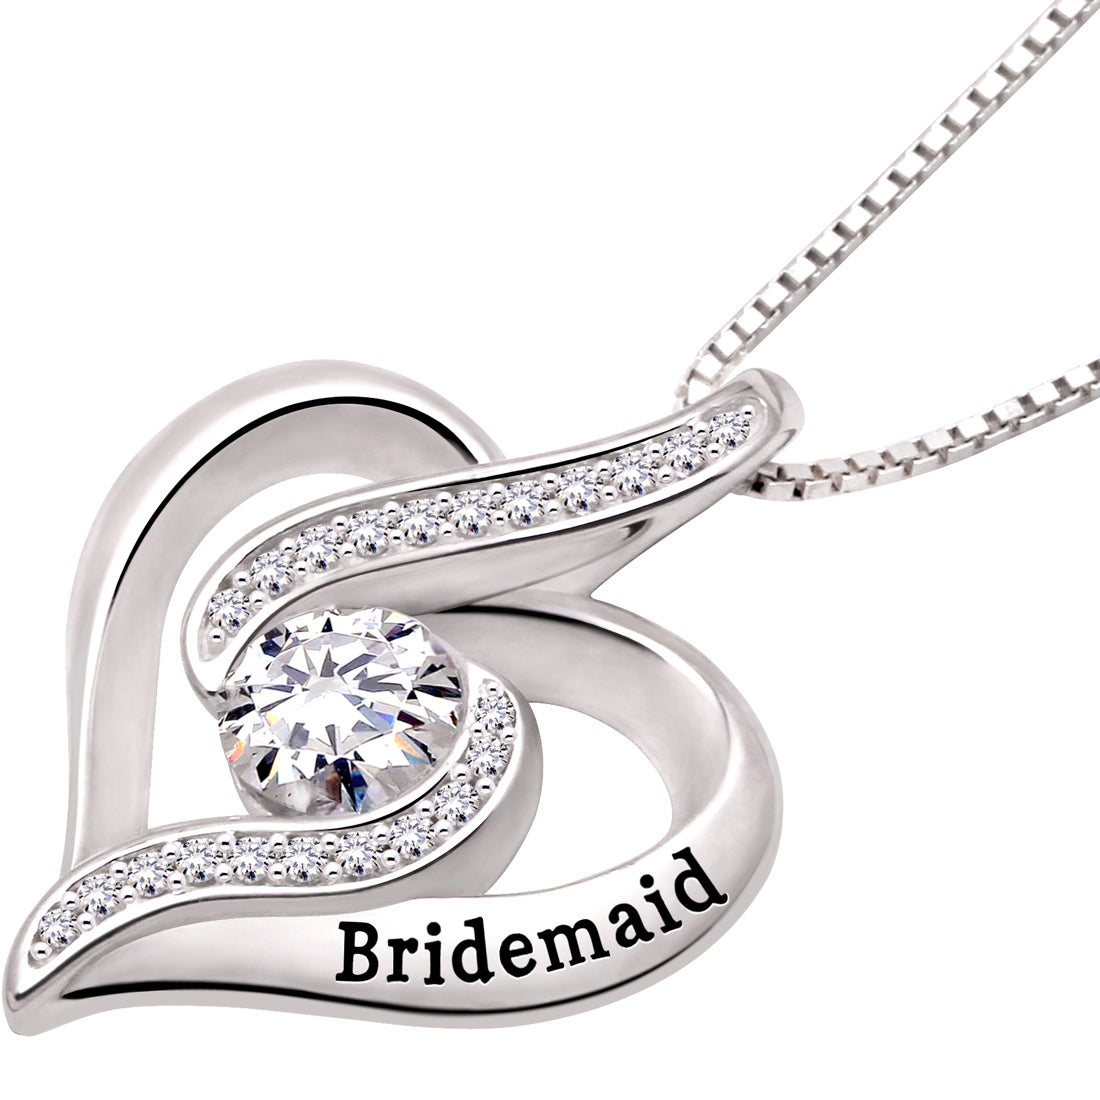 ALOV Jewelry Sterling Silver Bridemaid Cubic Zirconia Pendant Necklace